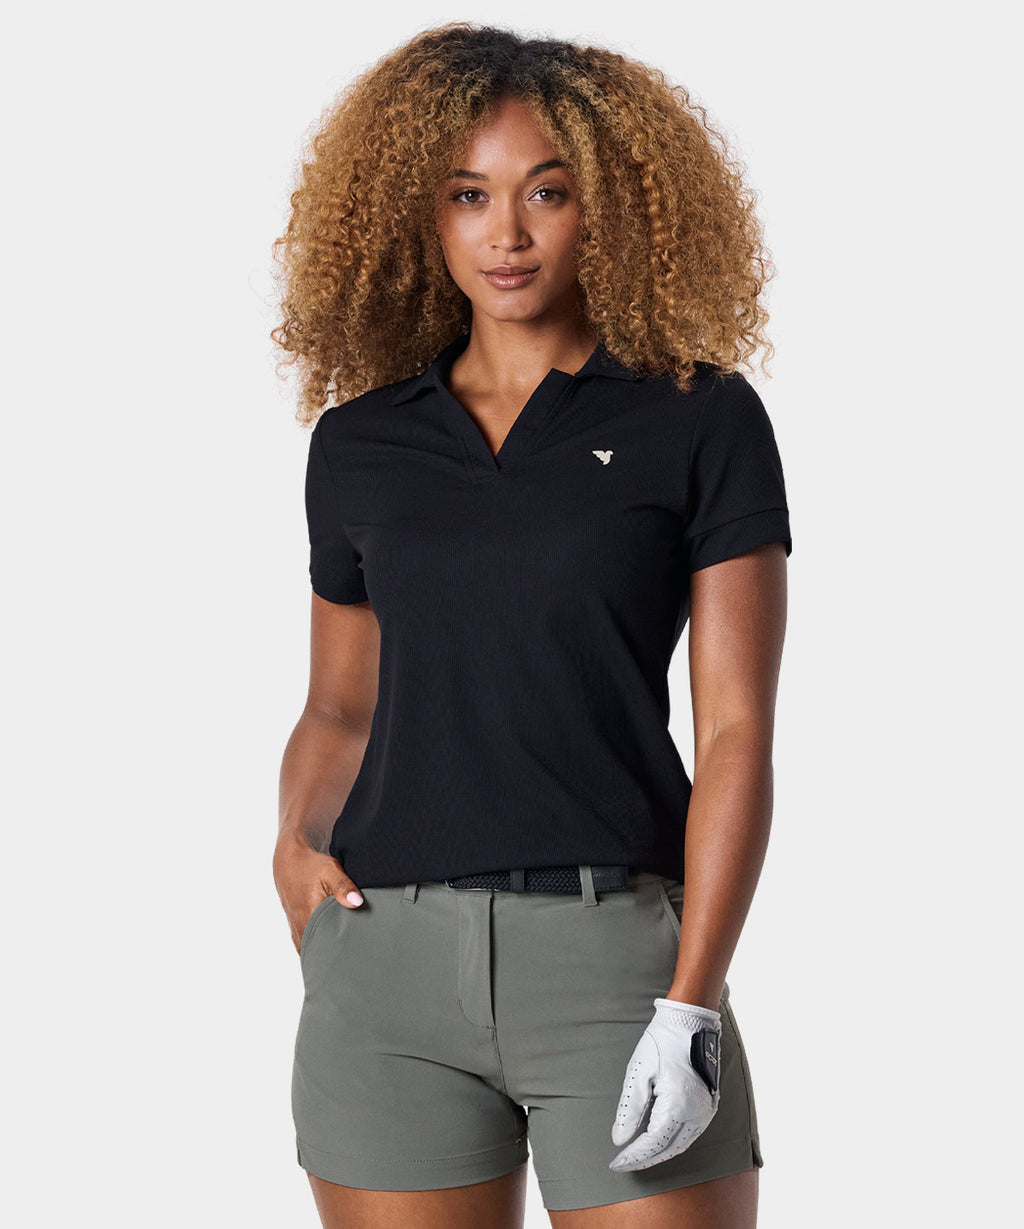 Tori Black Polo Shirt Macade Golf